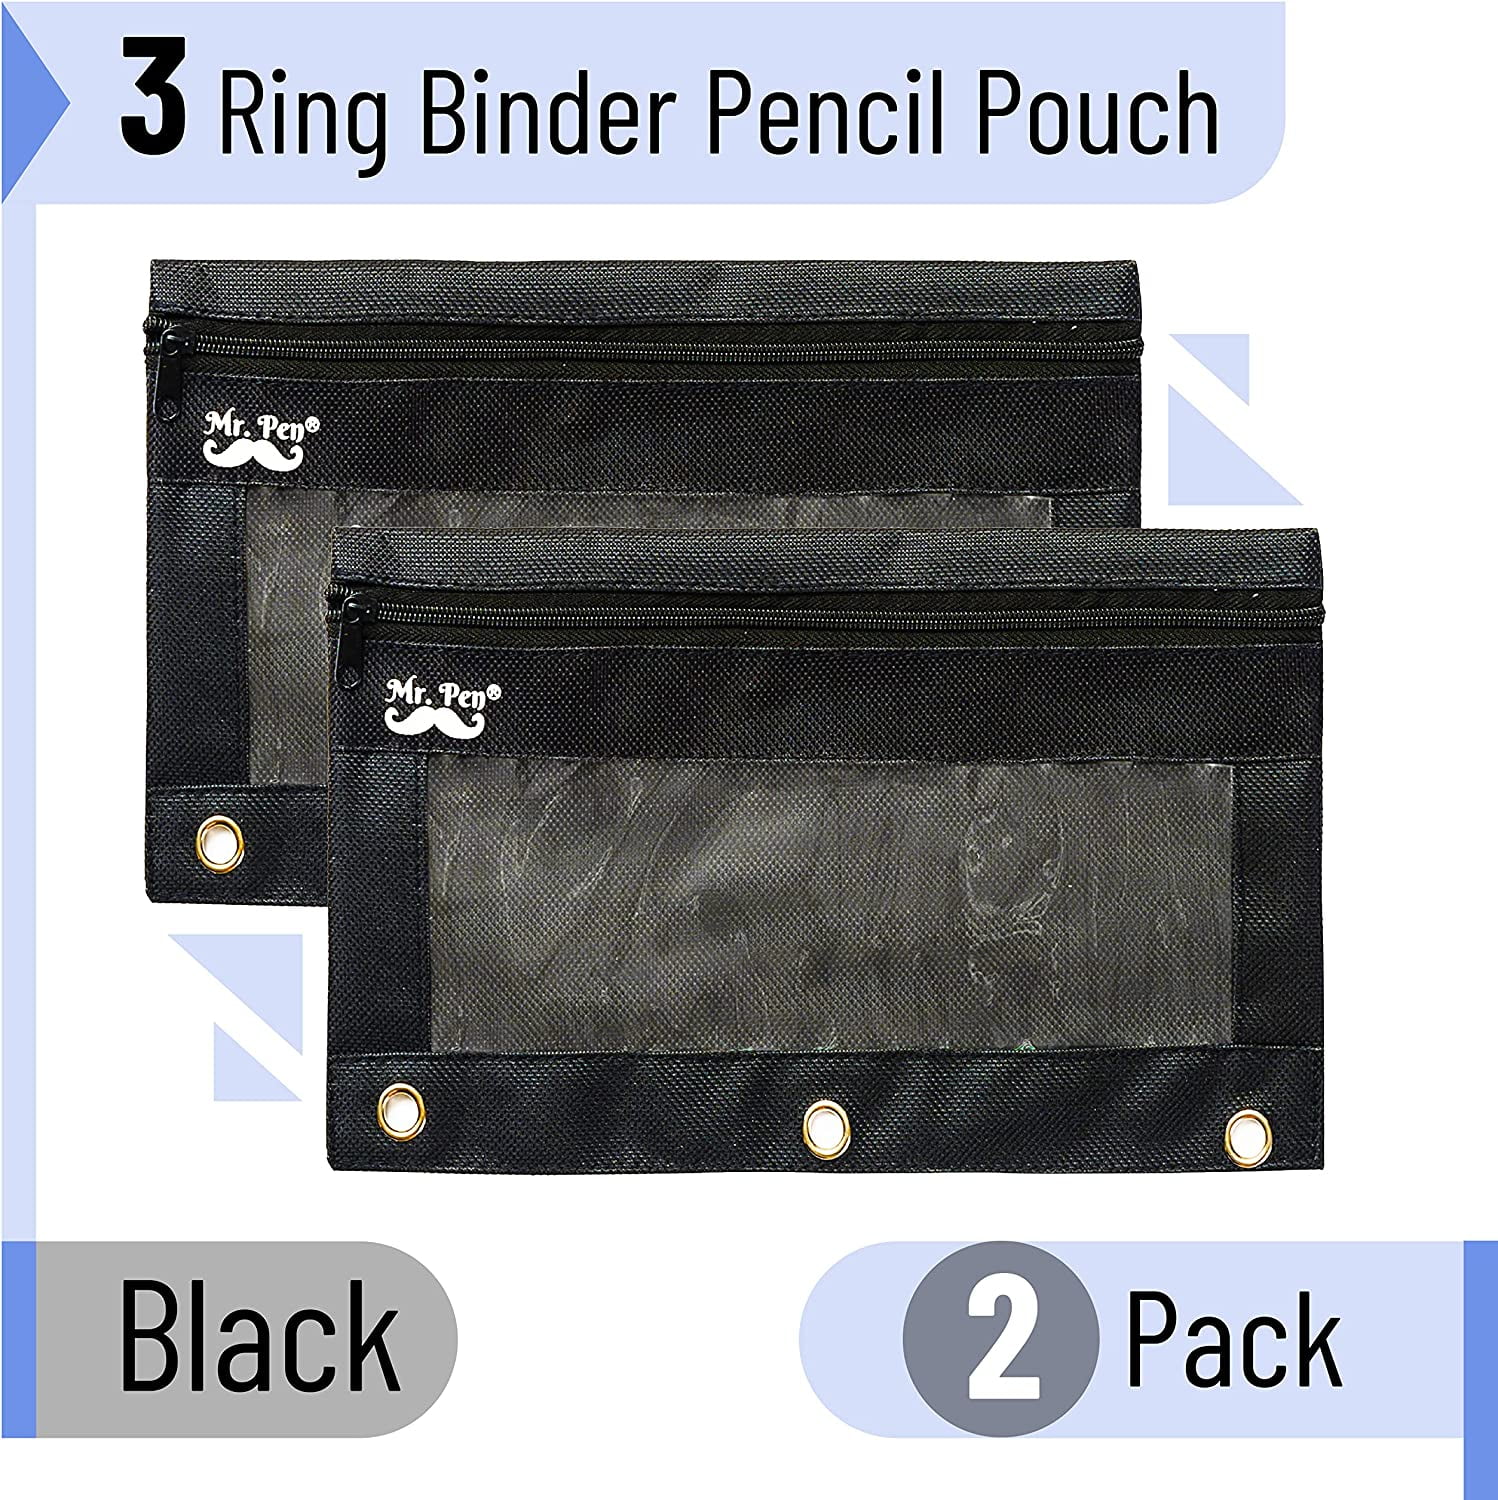 Mr. Pen - Pencil Pouch, Blue and Orange, 2 Fabric Pencil Pouches, Binder  Pockets, Pencil Case, Binder Pouch, Pencil Bags